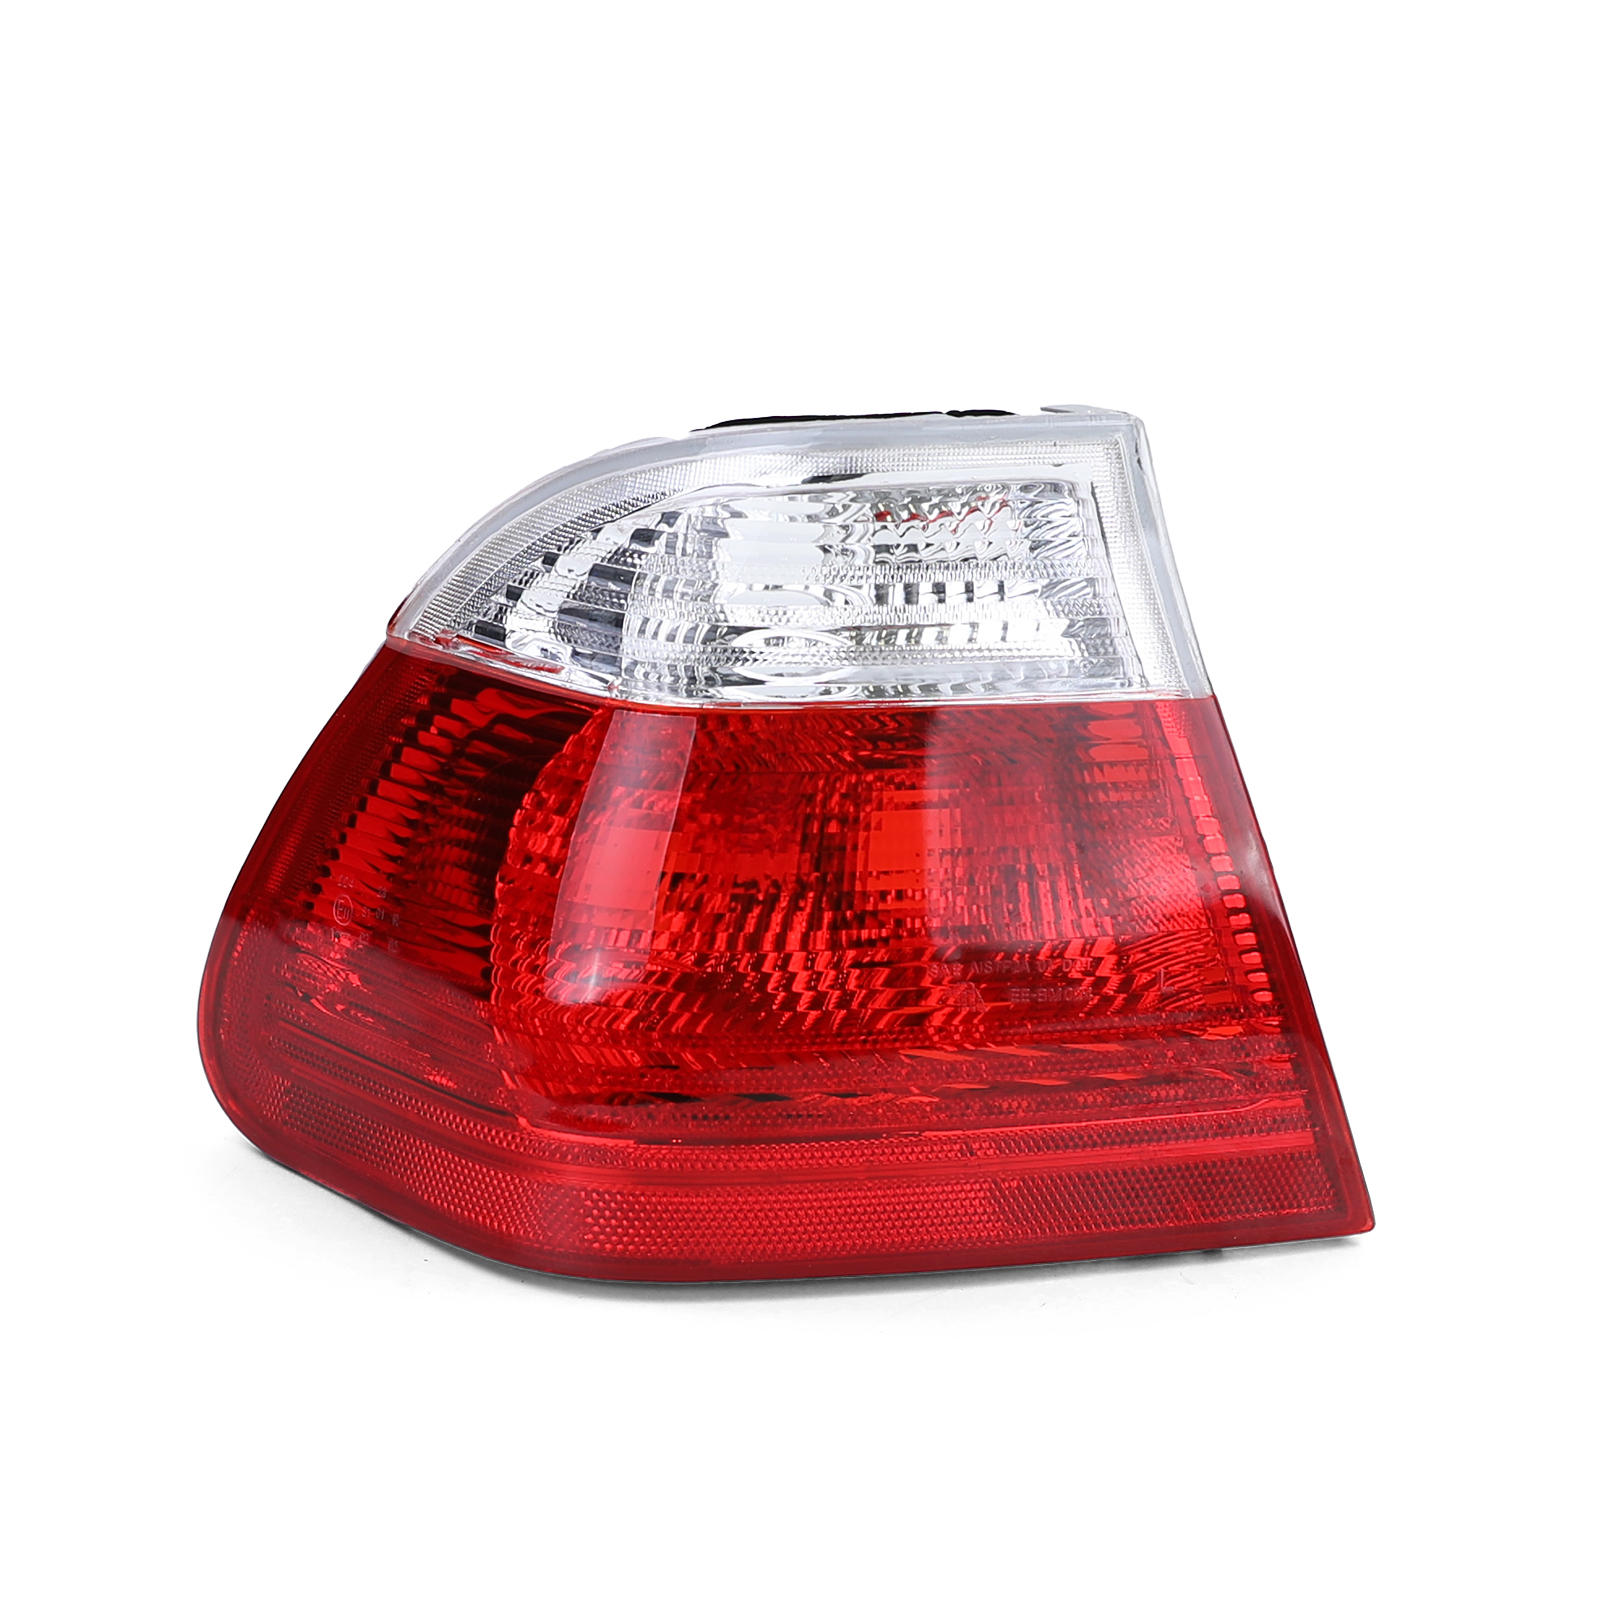 LED Rückleuchten Set 4-Teilig 3er für BMW E46 Limo Bj 98-01 rot weiß chrom